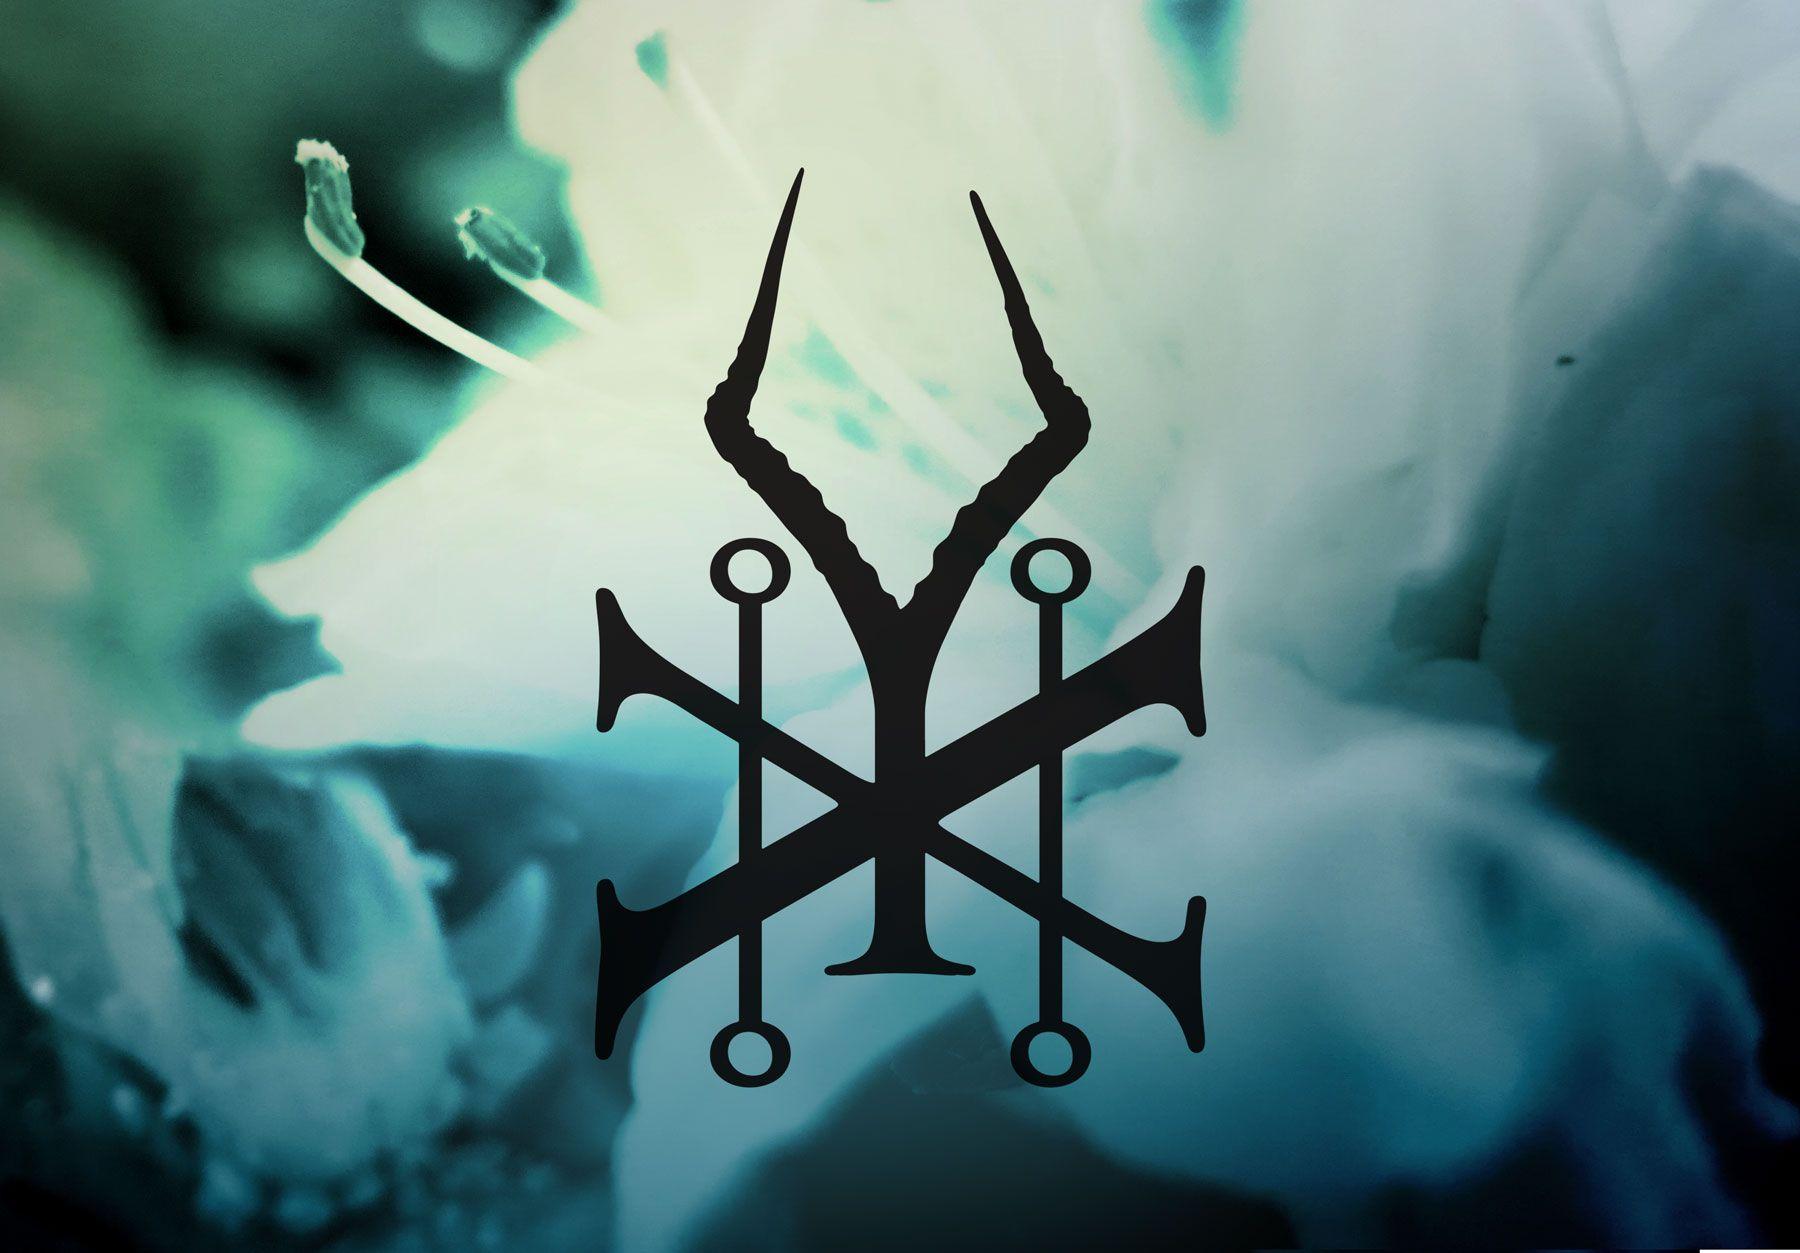 Soundgarden Logo - Official website for Soundgarden